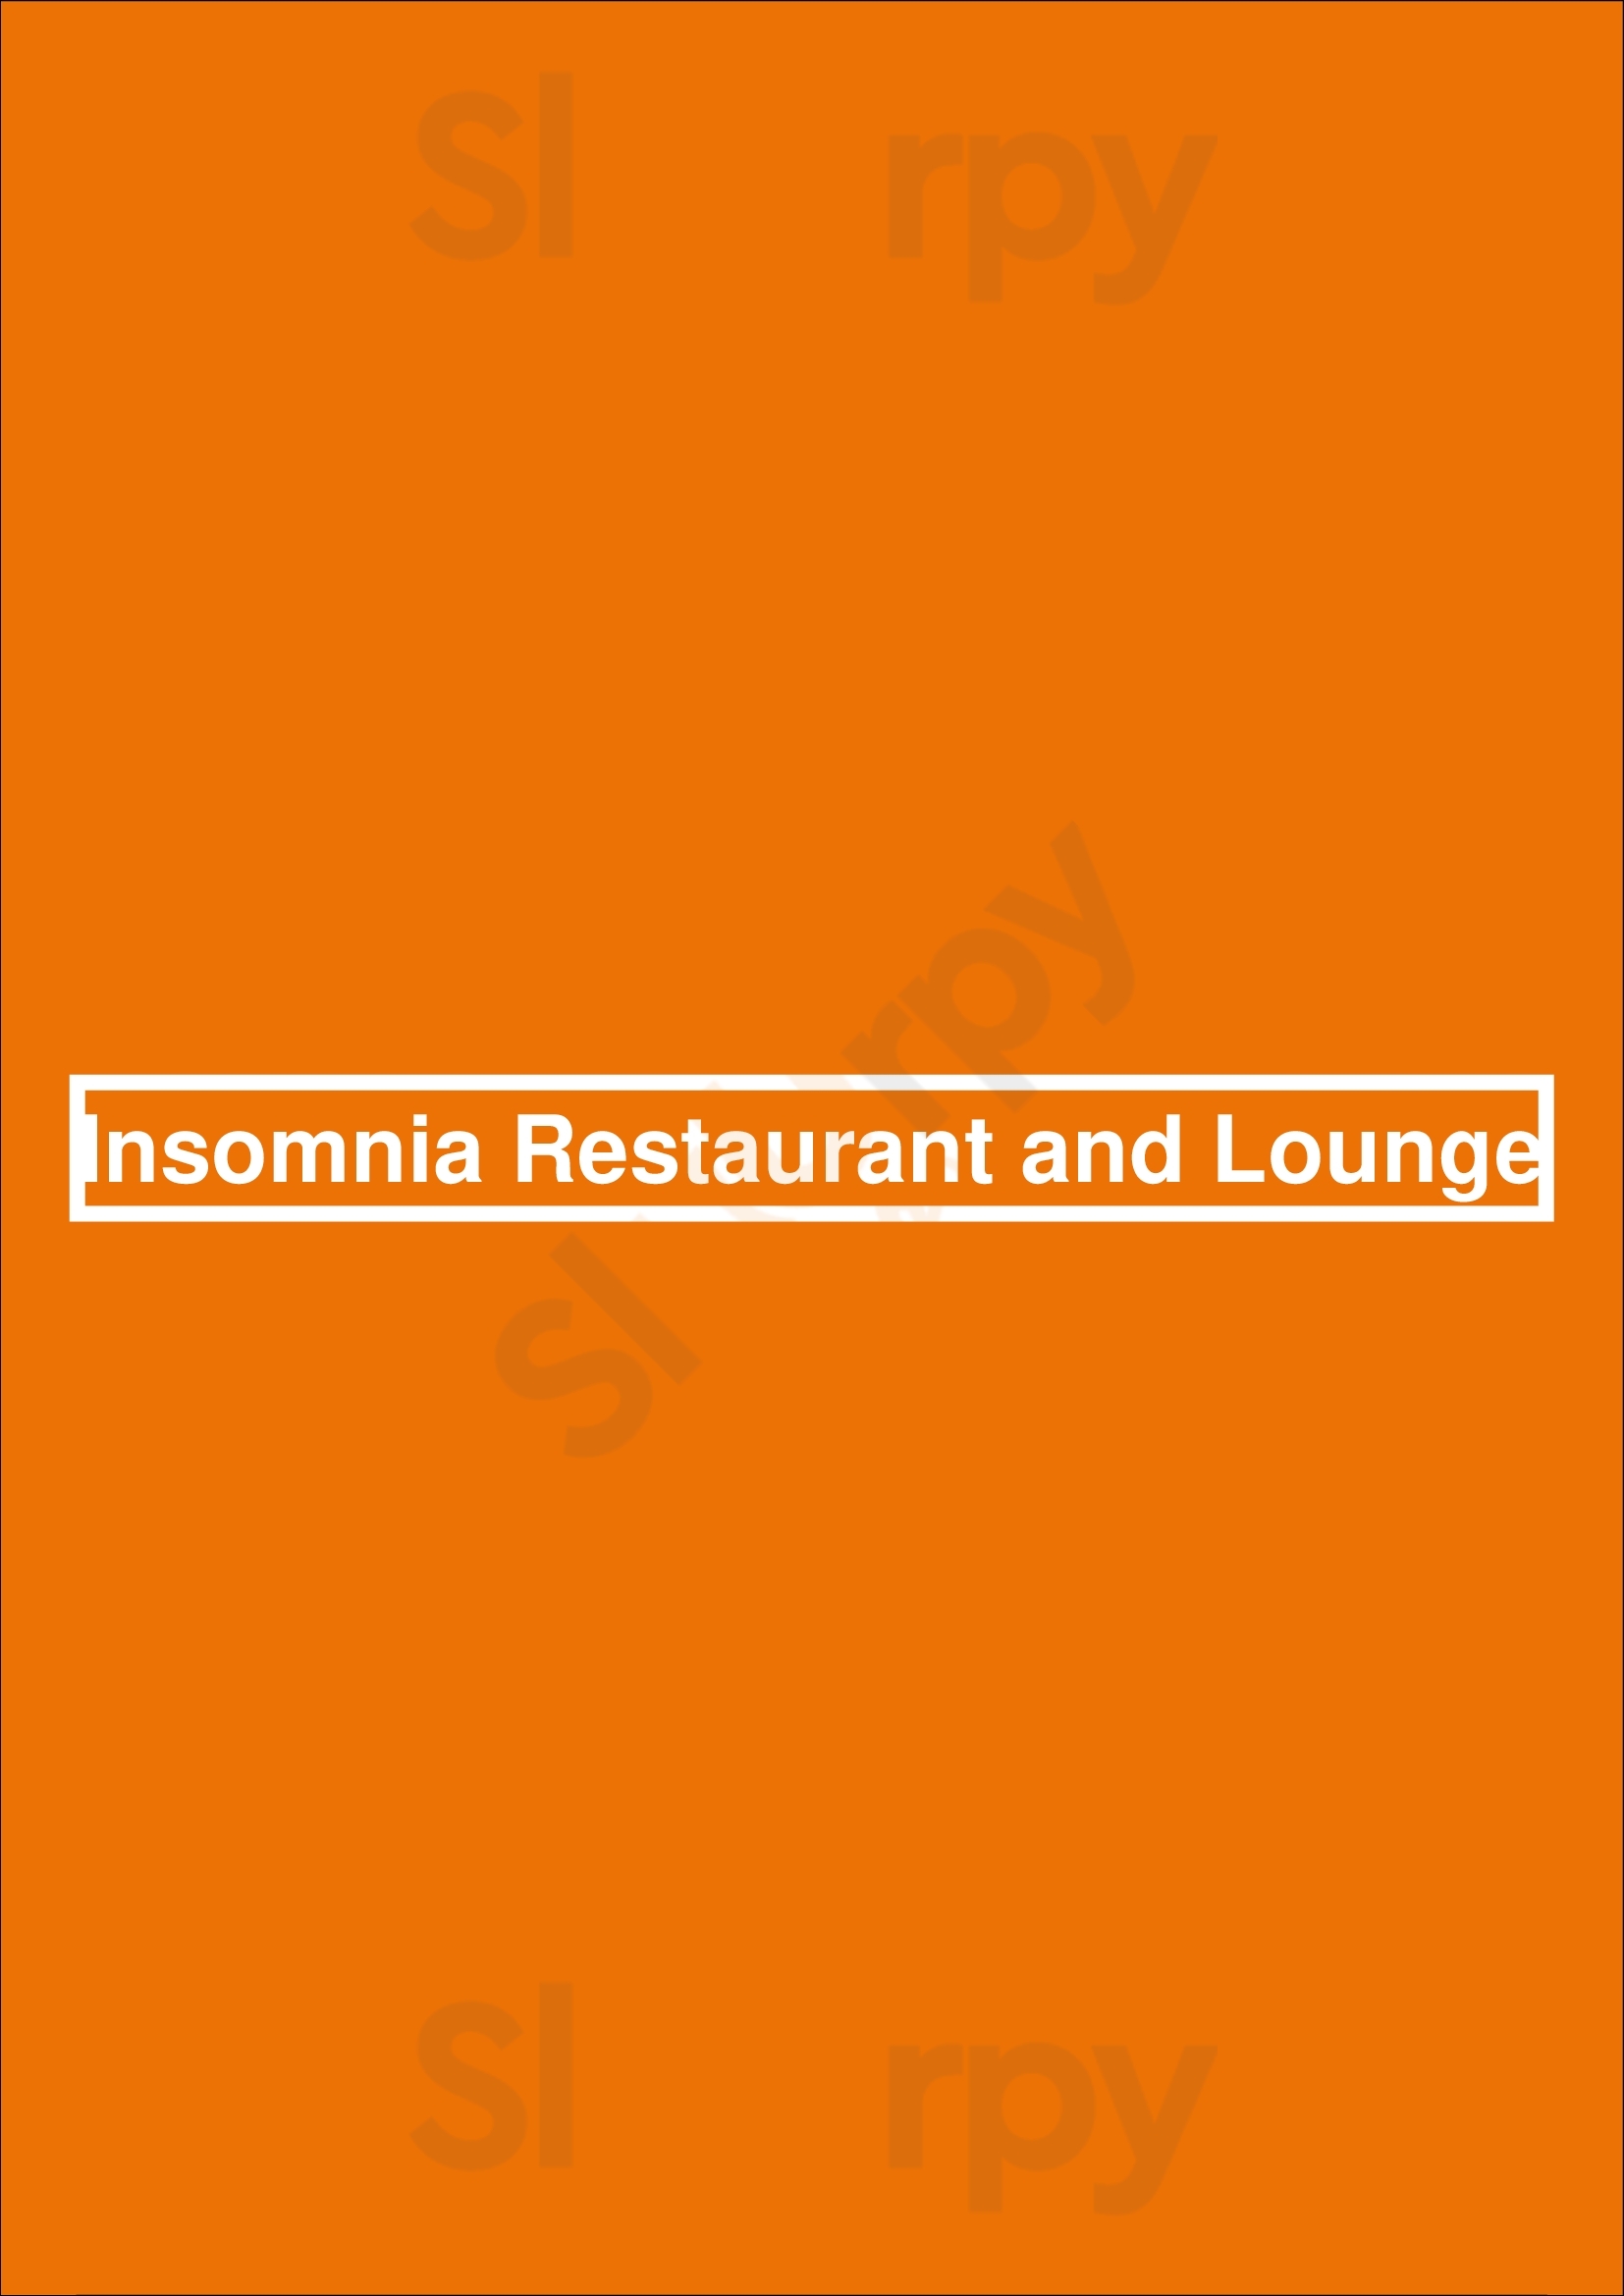 Insomnia Restaurant And Lounge Toronto Menu - 1